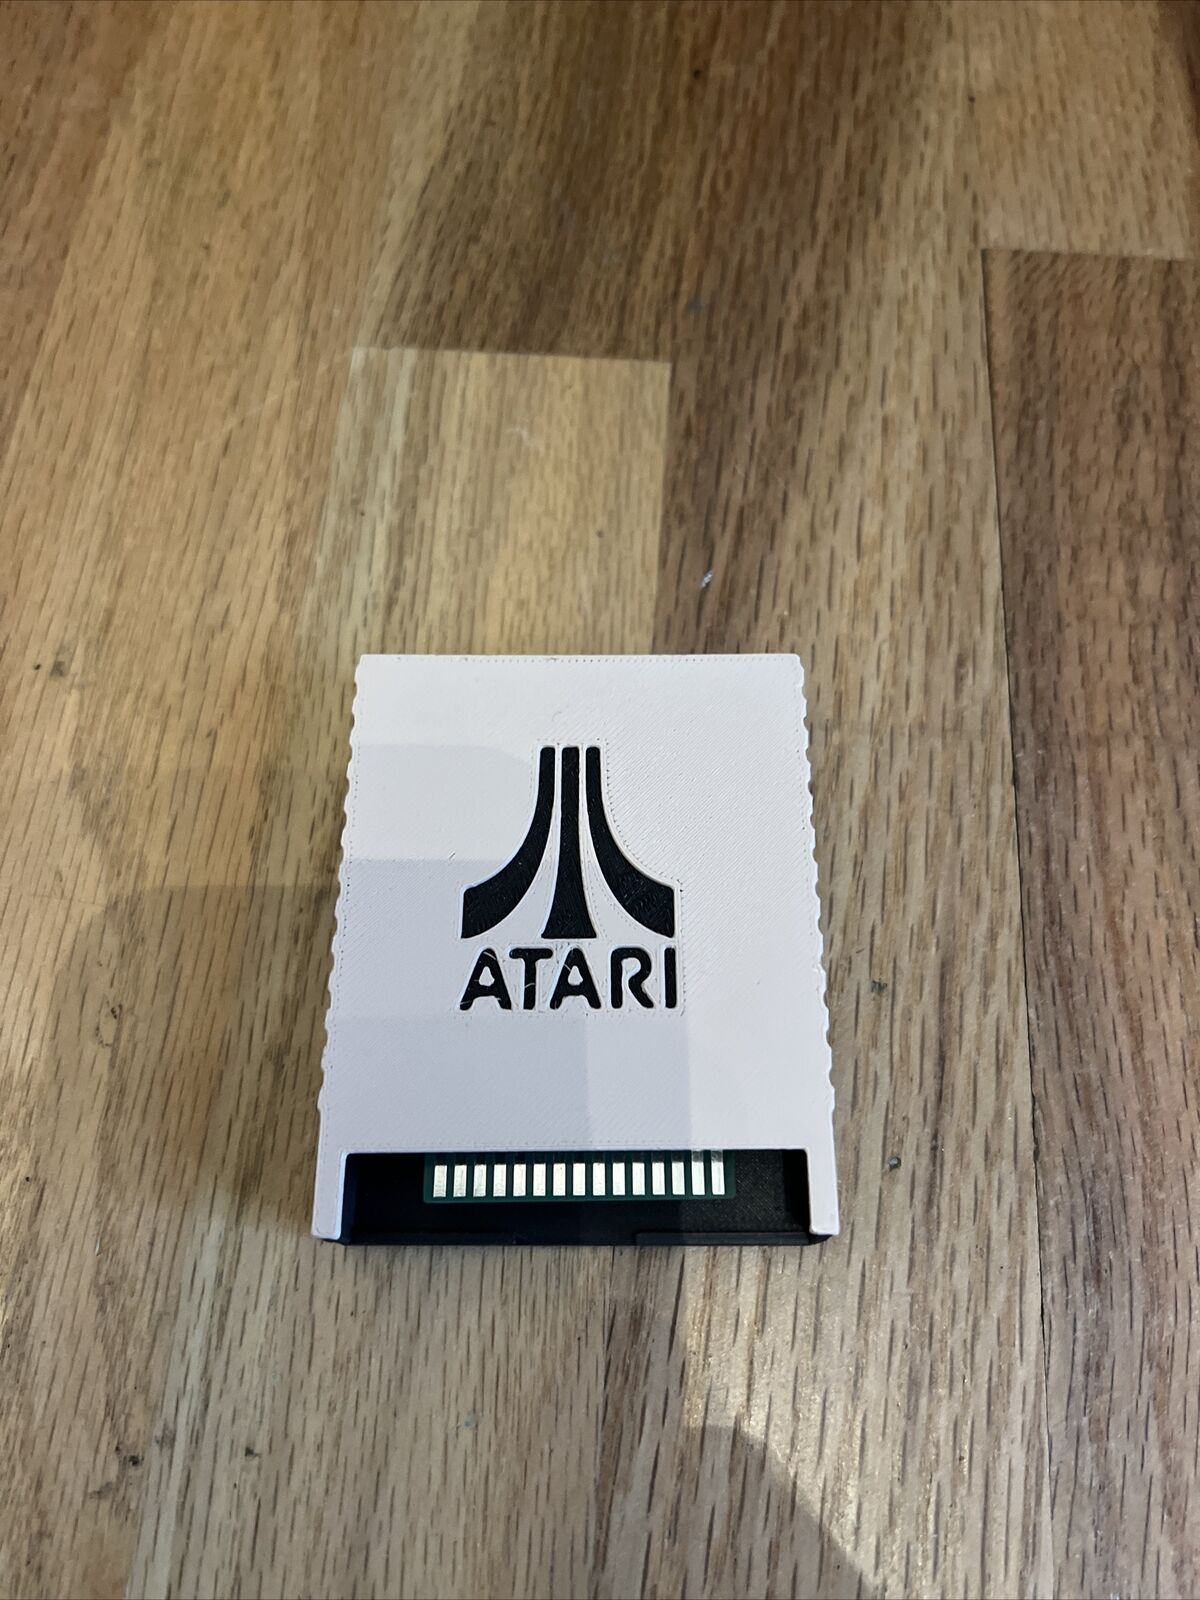 Atari 800xl 65xe 130xe XEGS  Pico Cart.  A8PicoCart.  Loaded with ROMs